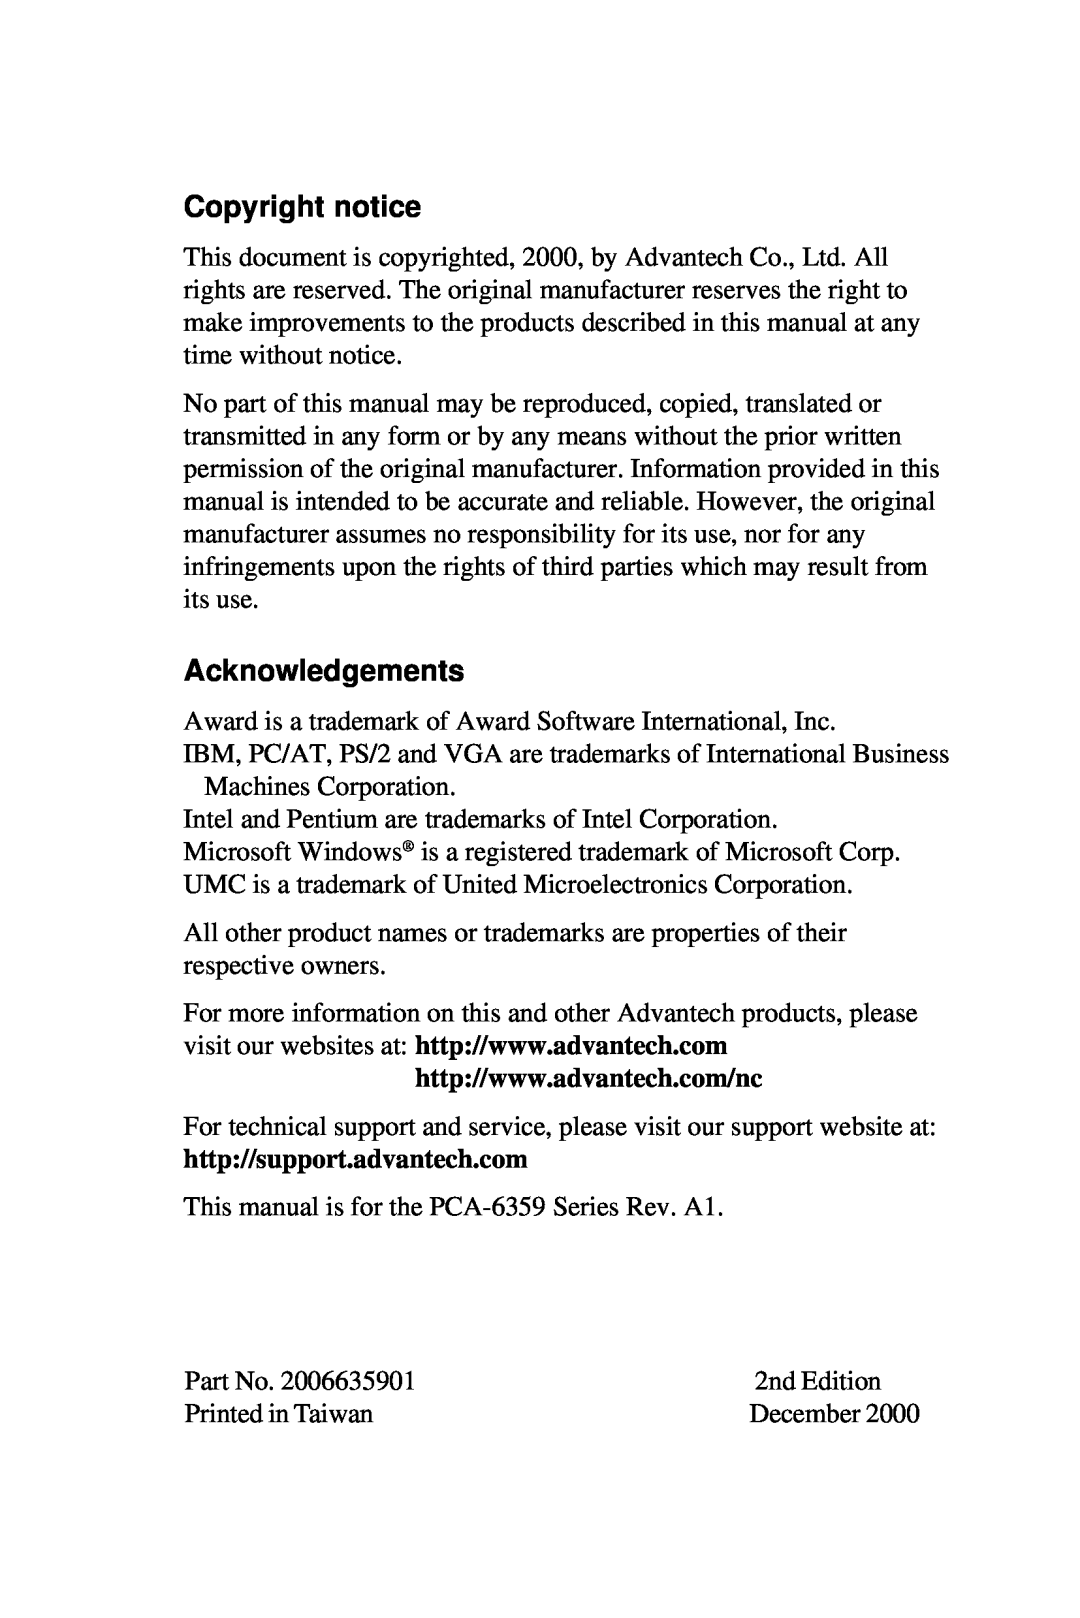 Advantech PCA-6359 user manual Copyright notice, Acknowledgements, http//support.advantech.com 